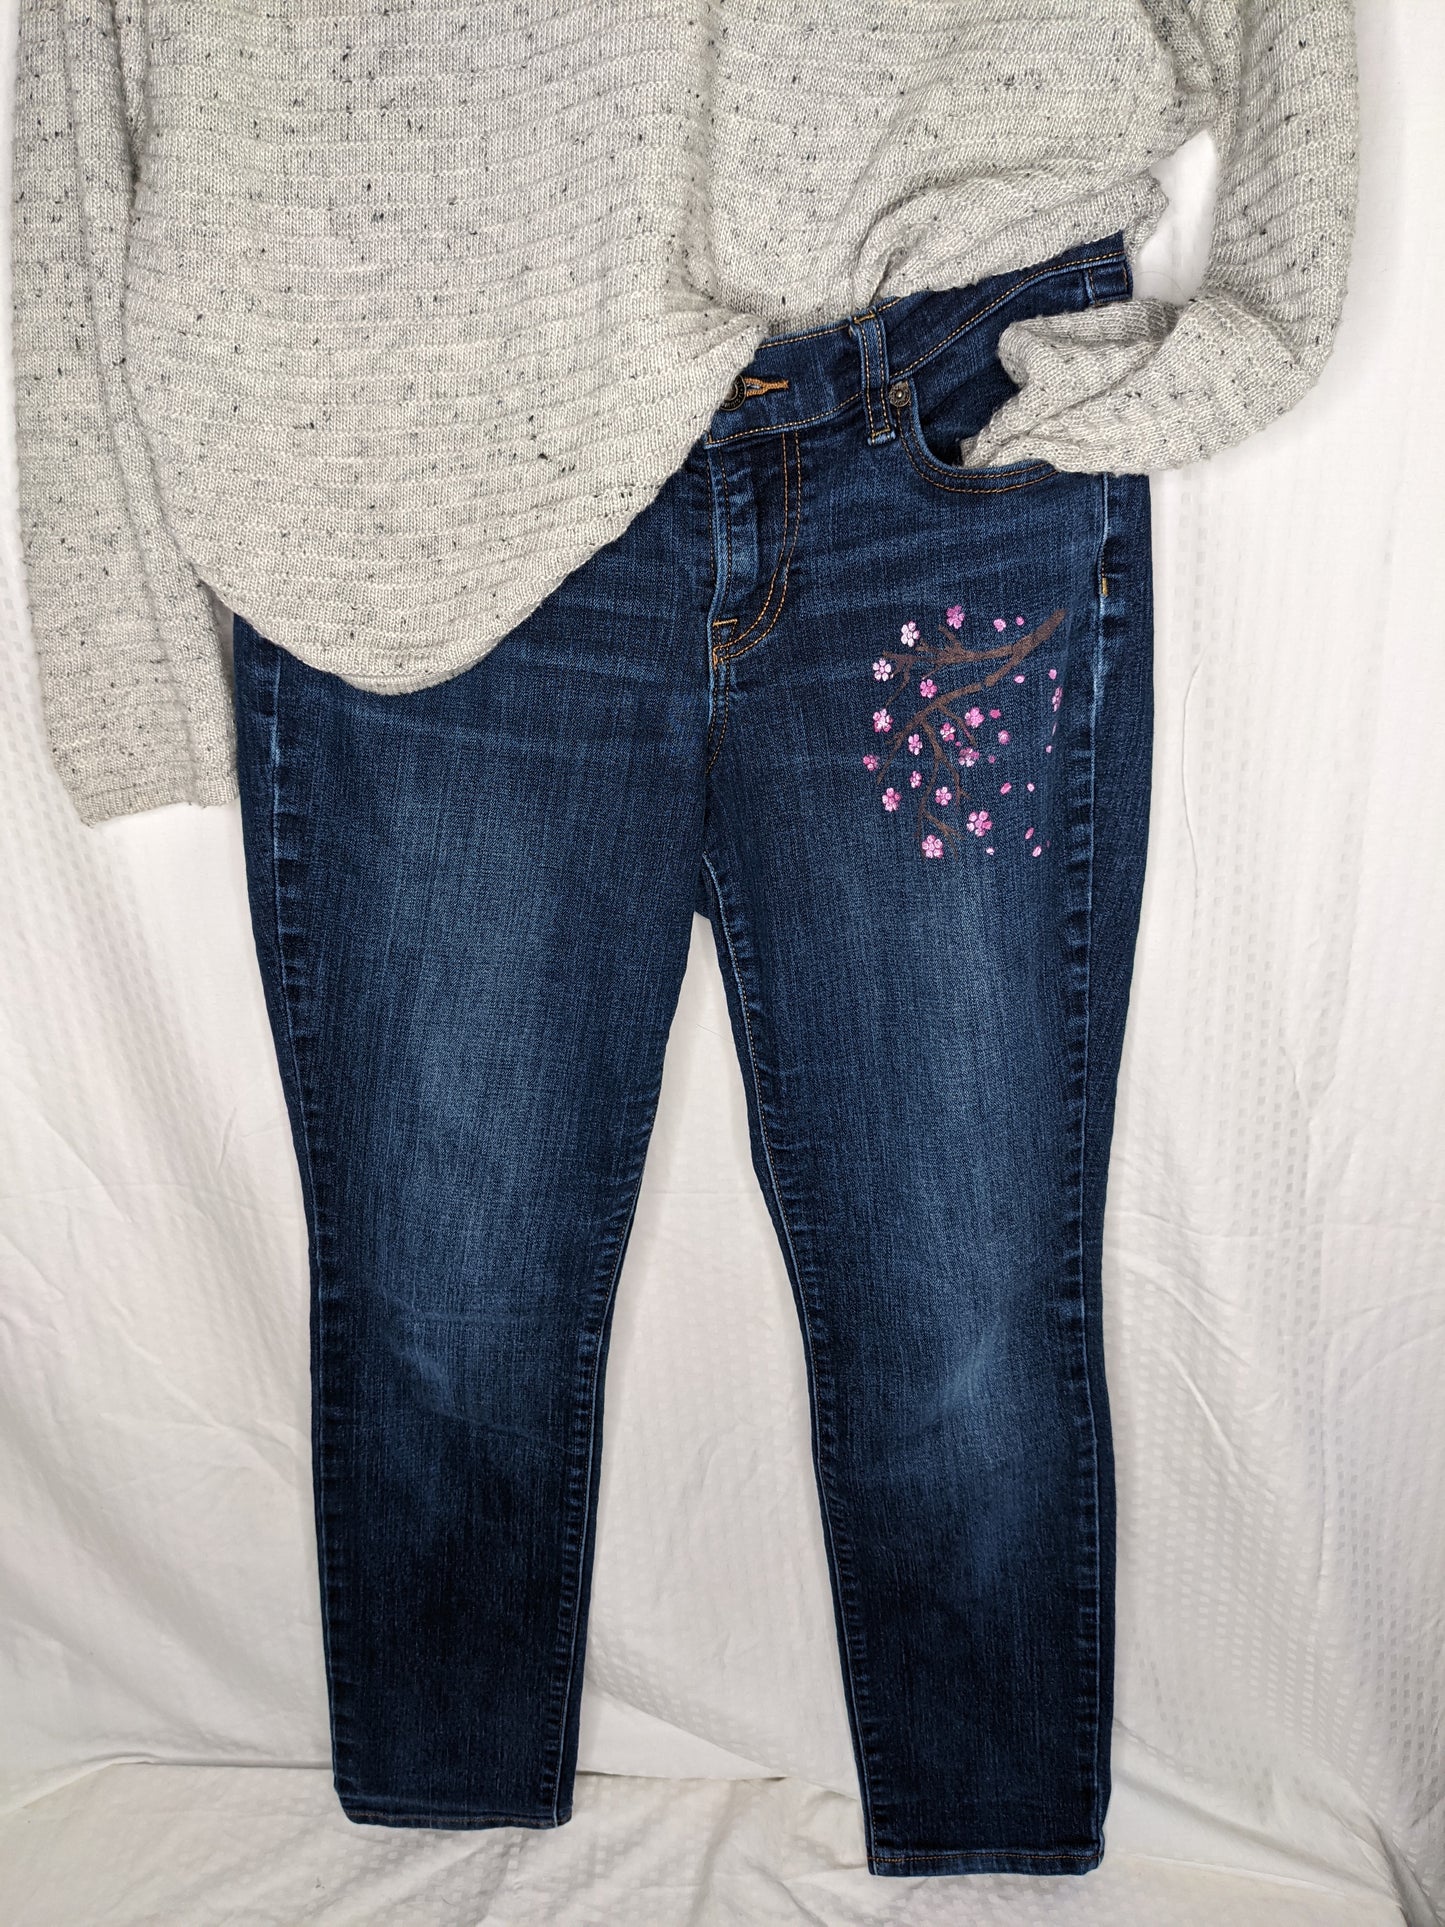 Eco Pretty Upcycled Cherry Blossom Print Dark Wash Skinny Jeans - Size 6